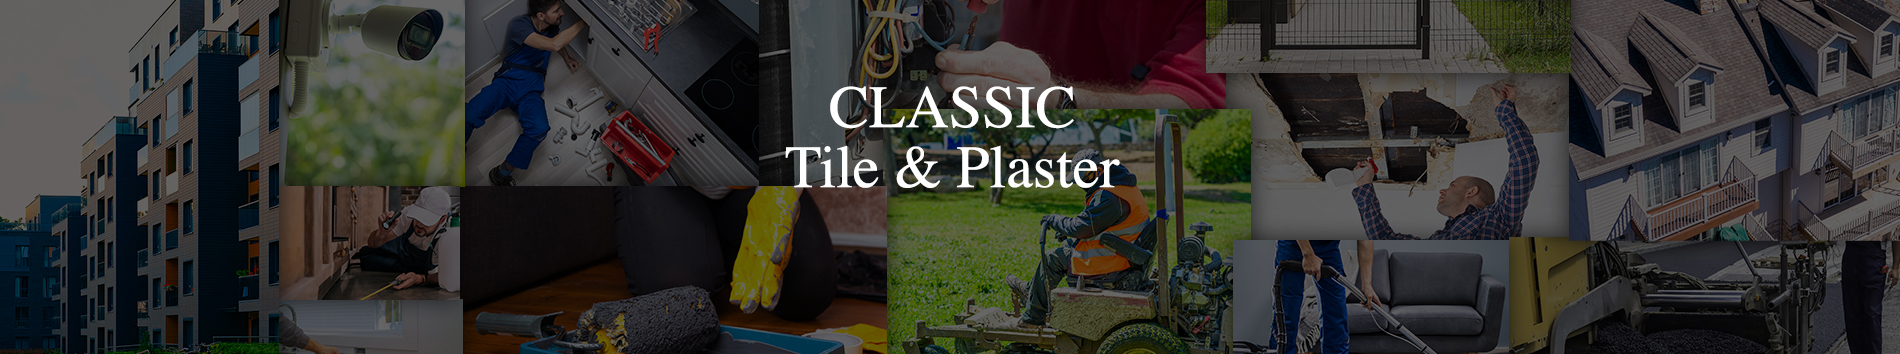 Classic Tile & Plastering, Inc.